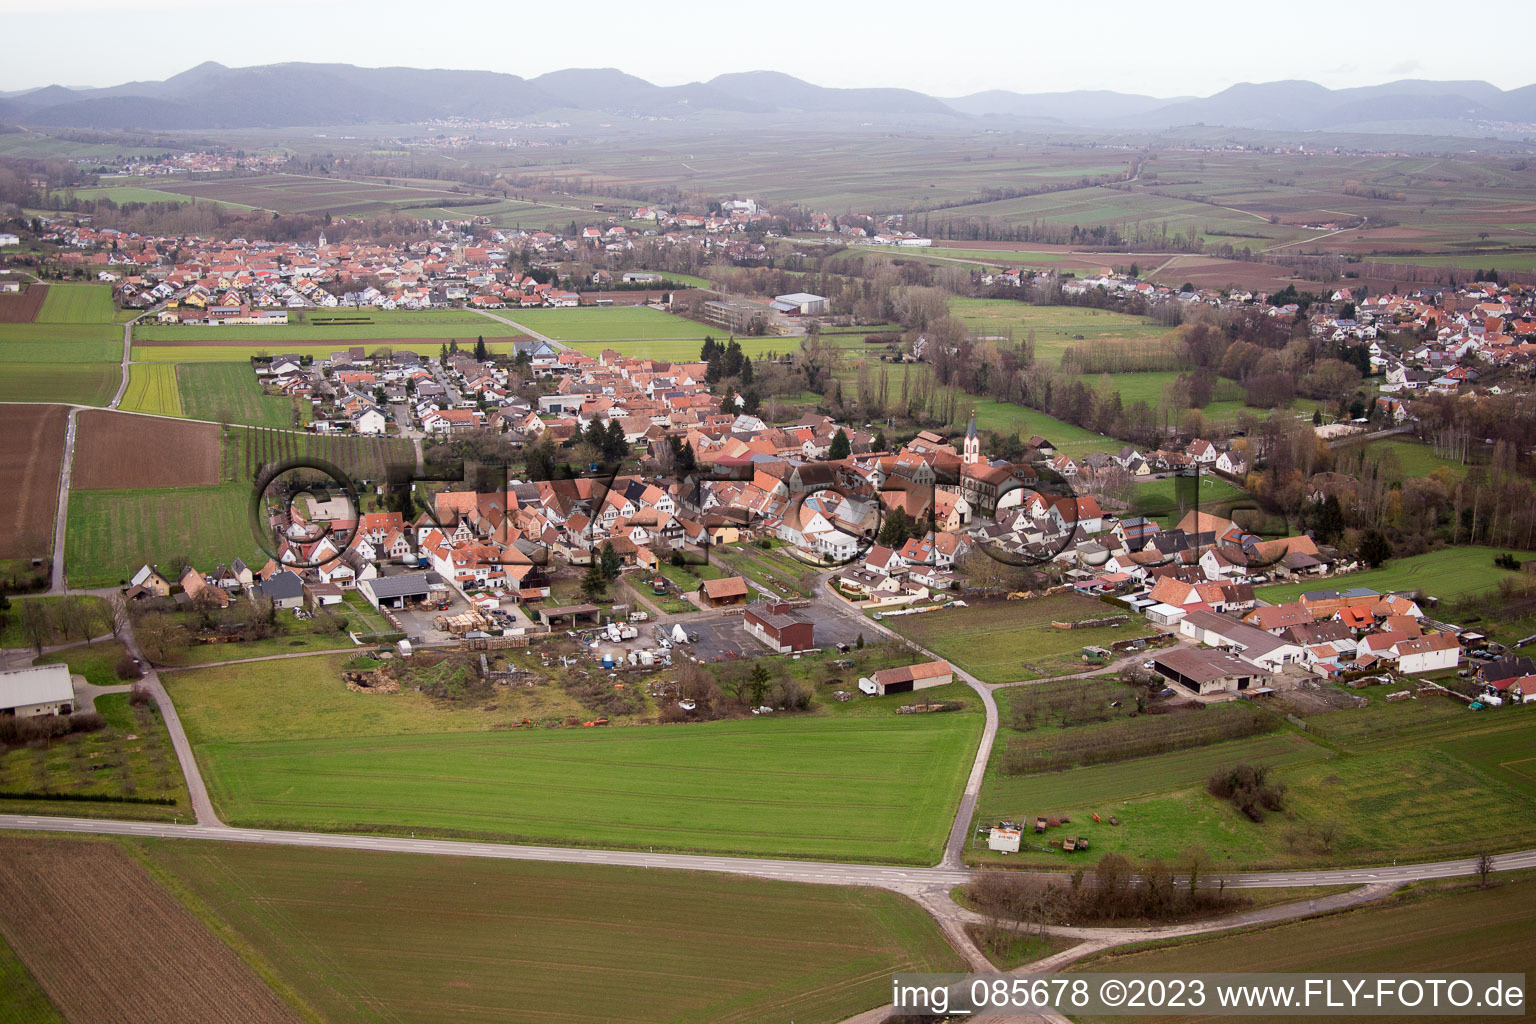 District Mühlhofen in Billigheim-Ingenheim in the state Rhineland-Palatinate, Germany seen from above